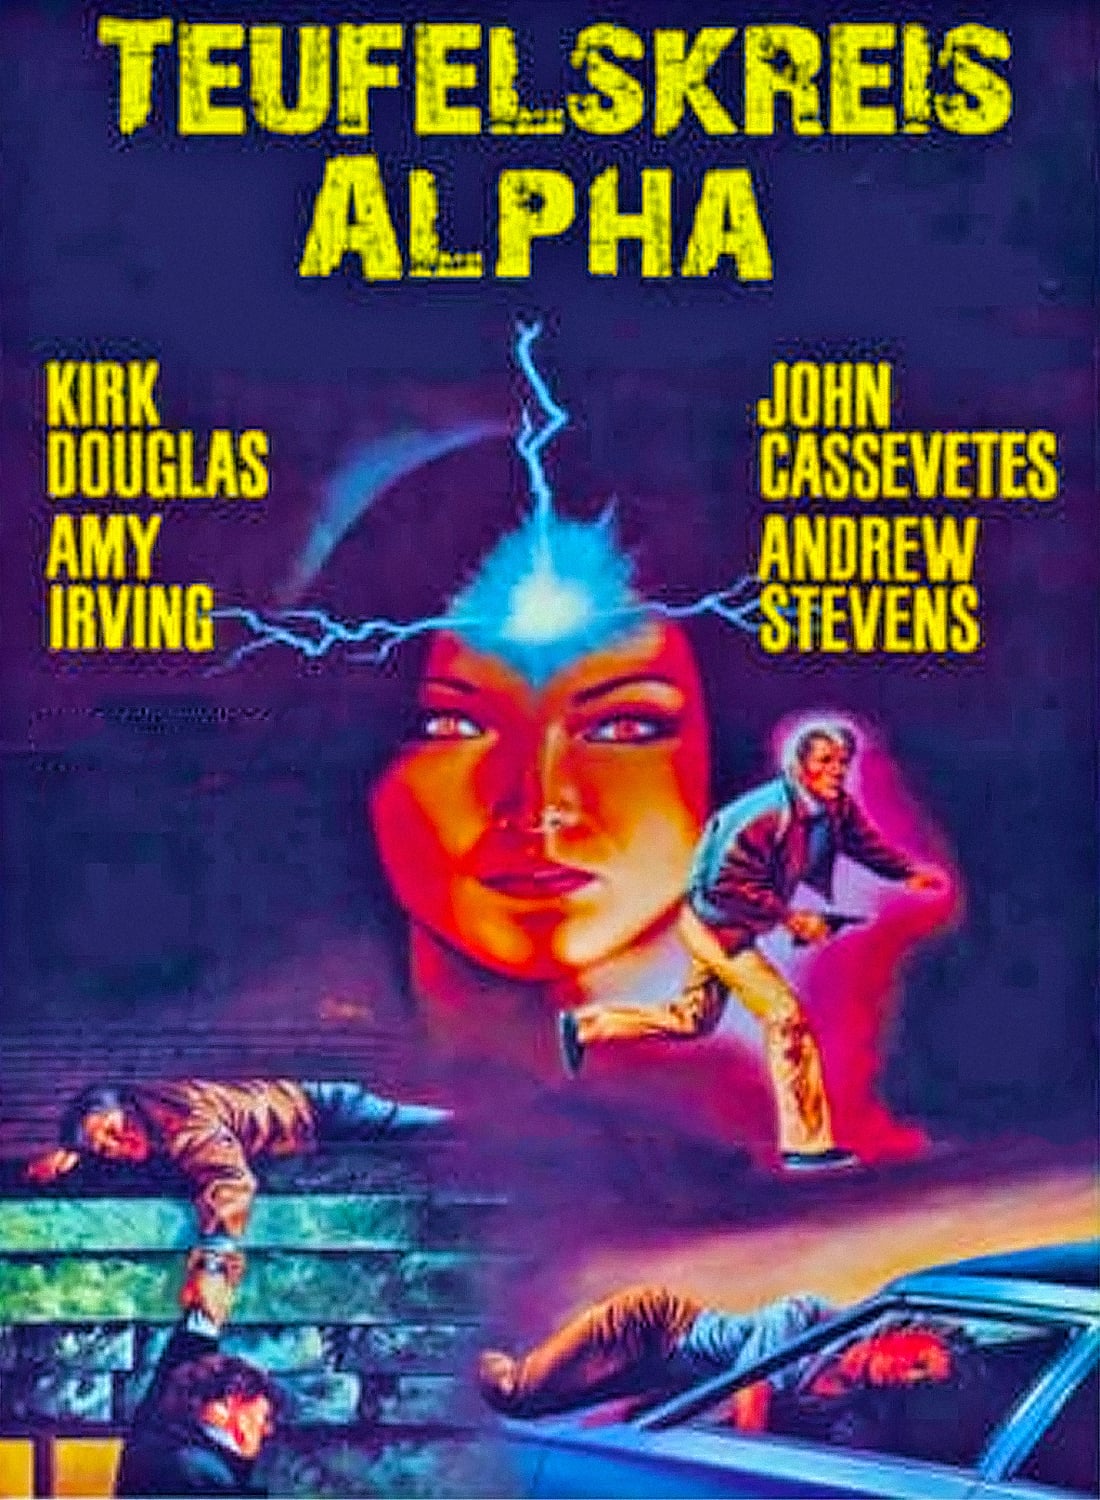 Plakat von "Teufelskreis Alpha"